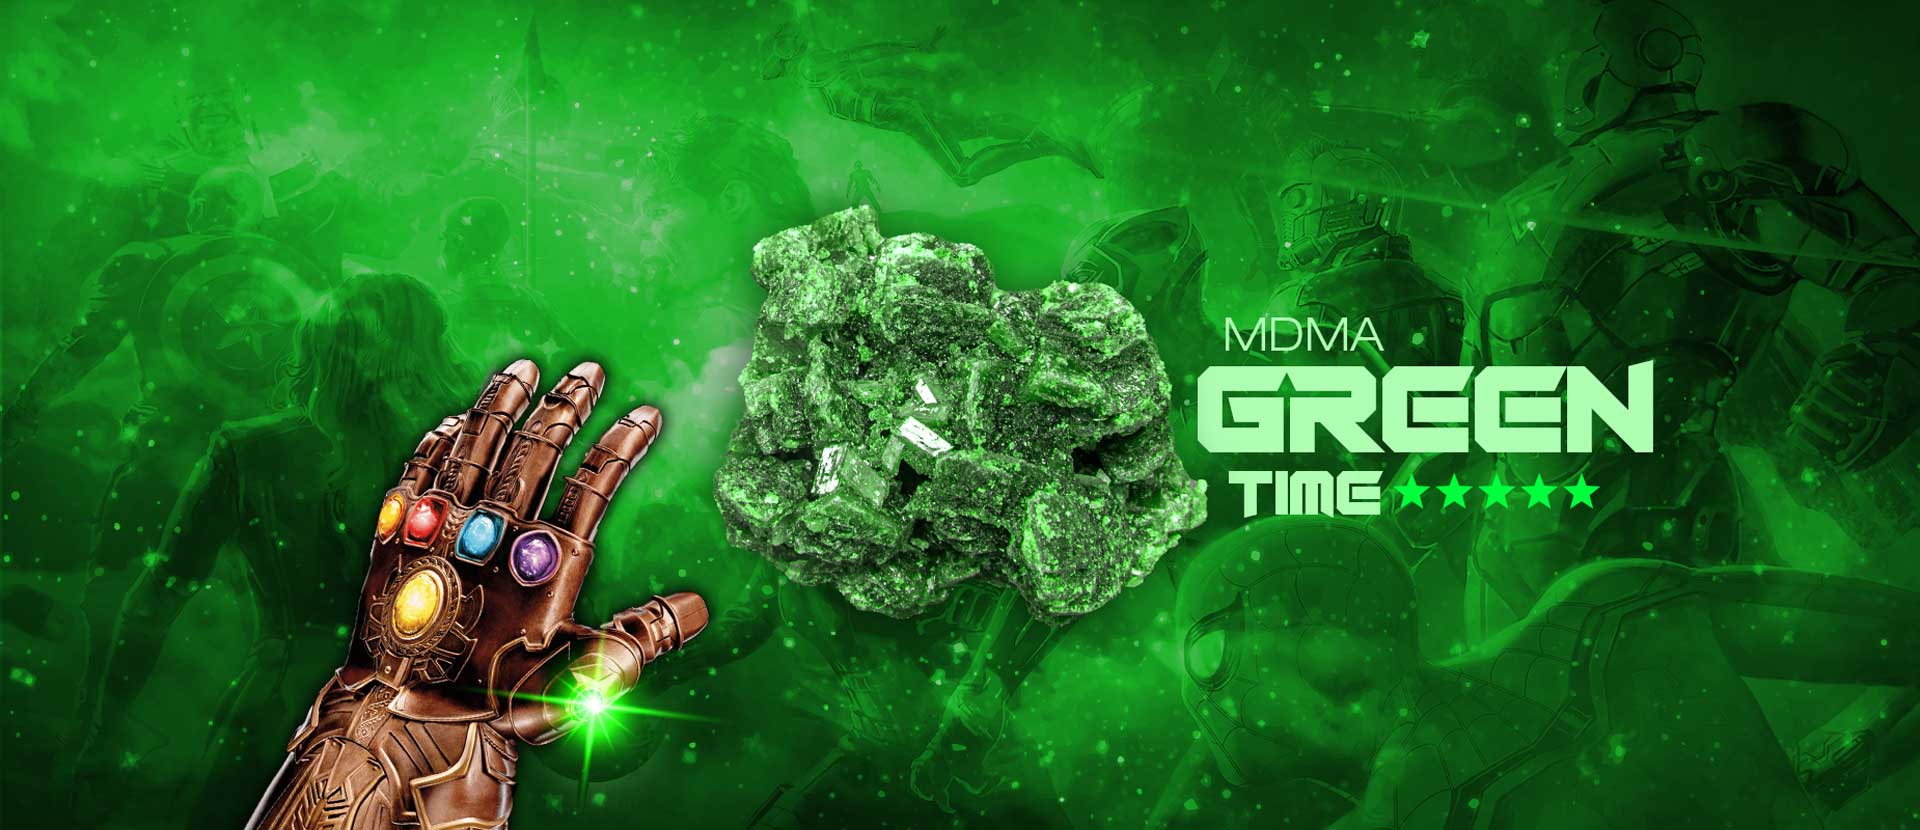 green-time-banner-mdma